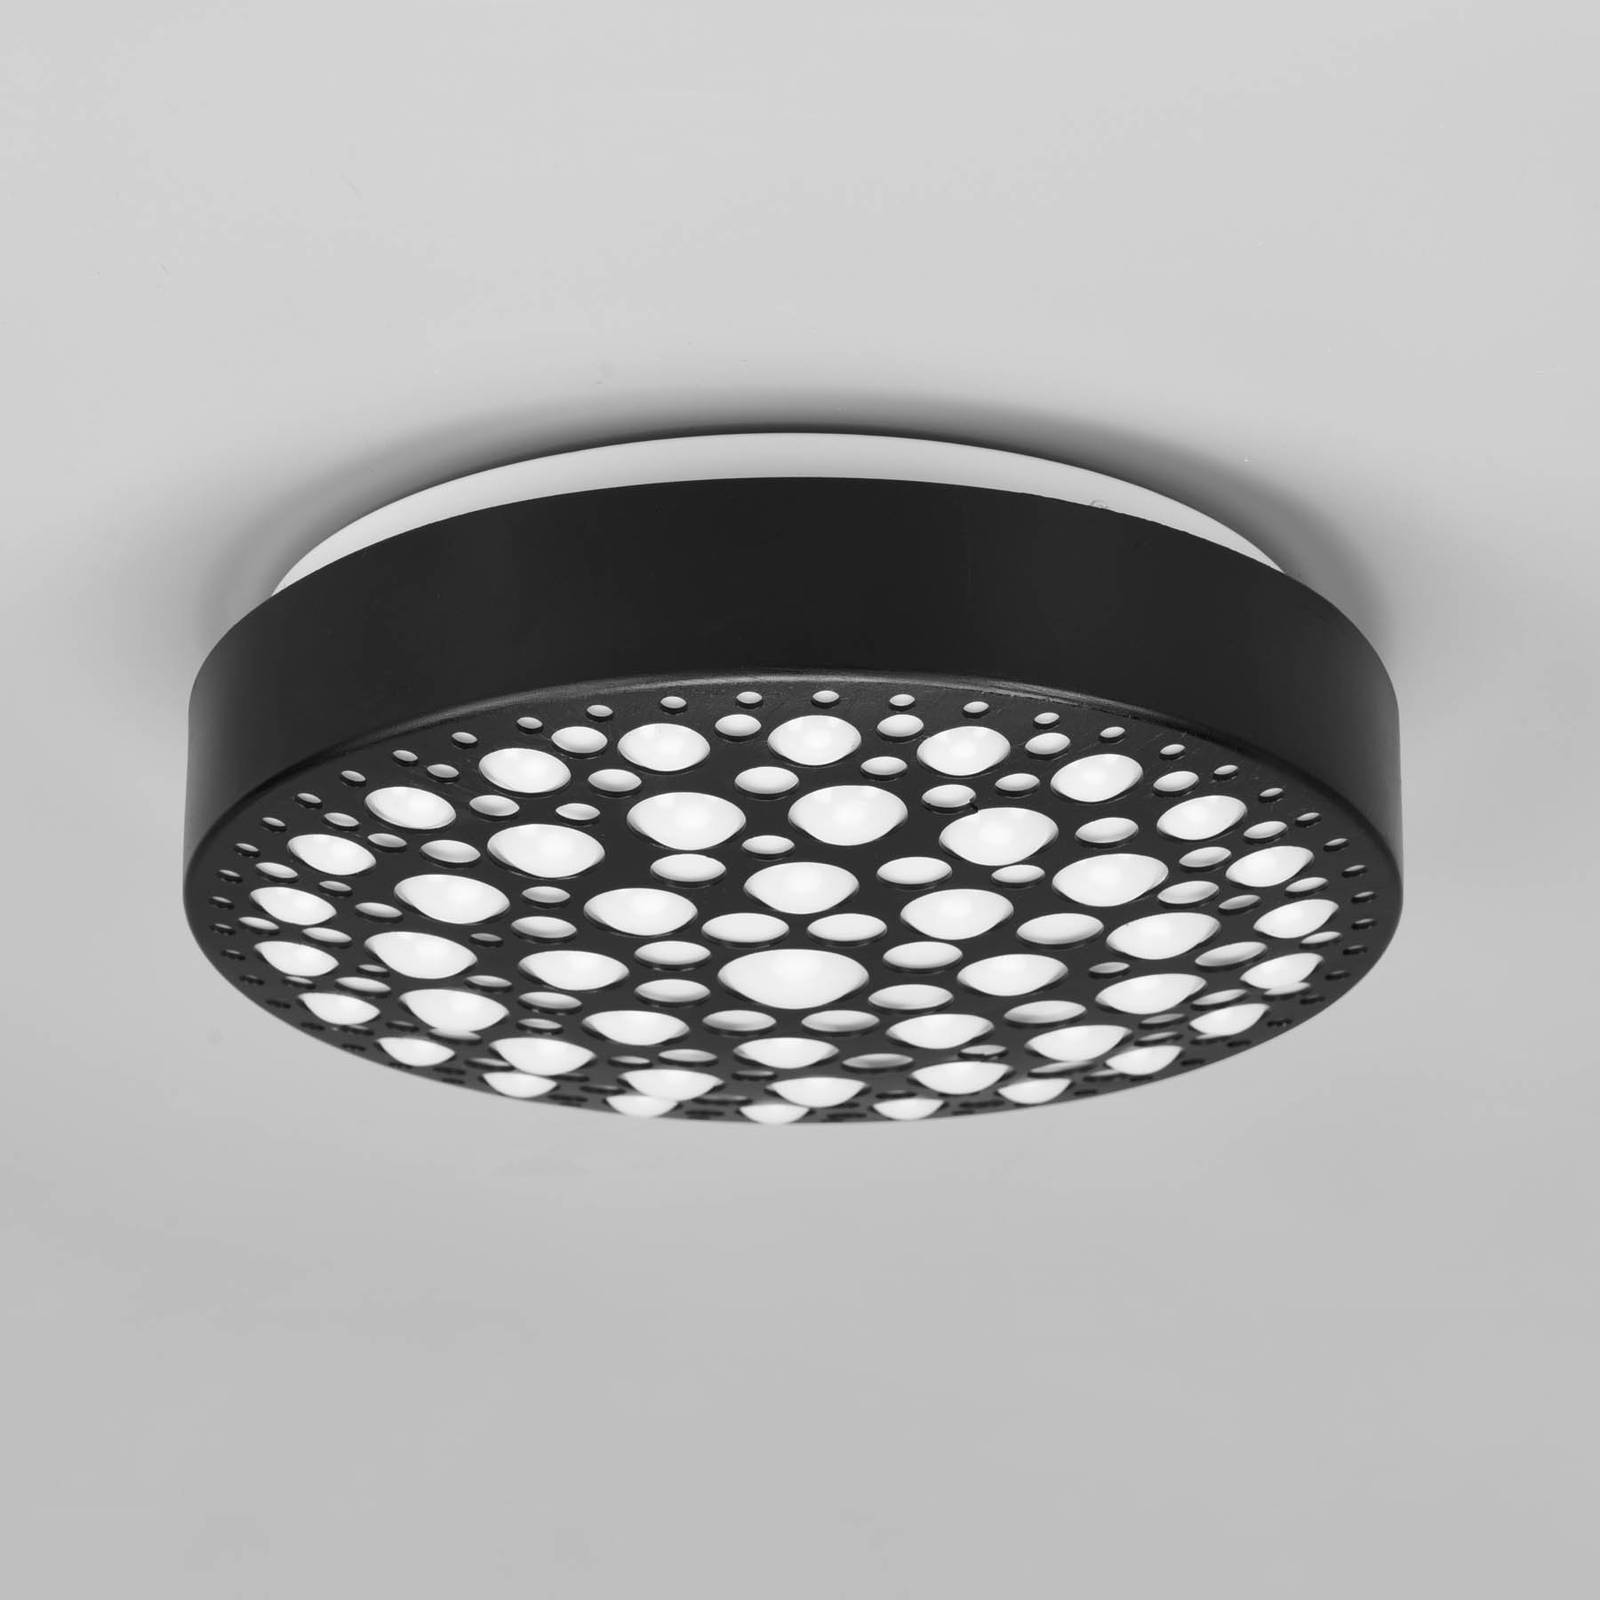 Reality Leuchten Chizu LED ceiling light, Ø 28.5 cm, 3,000 K black